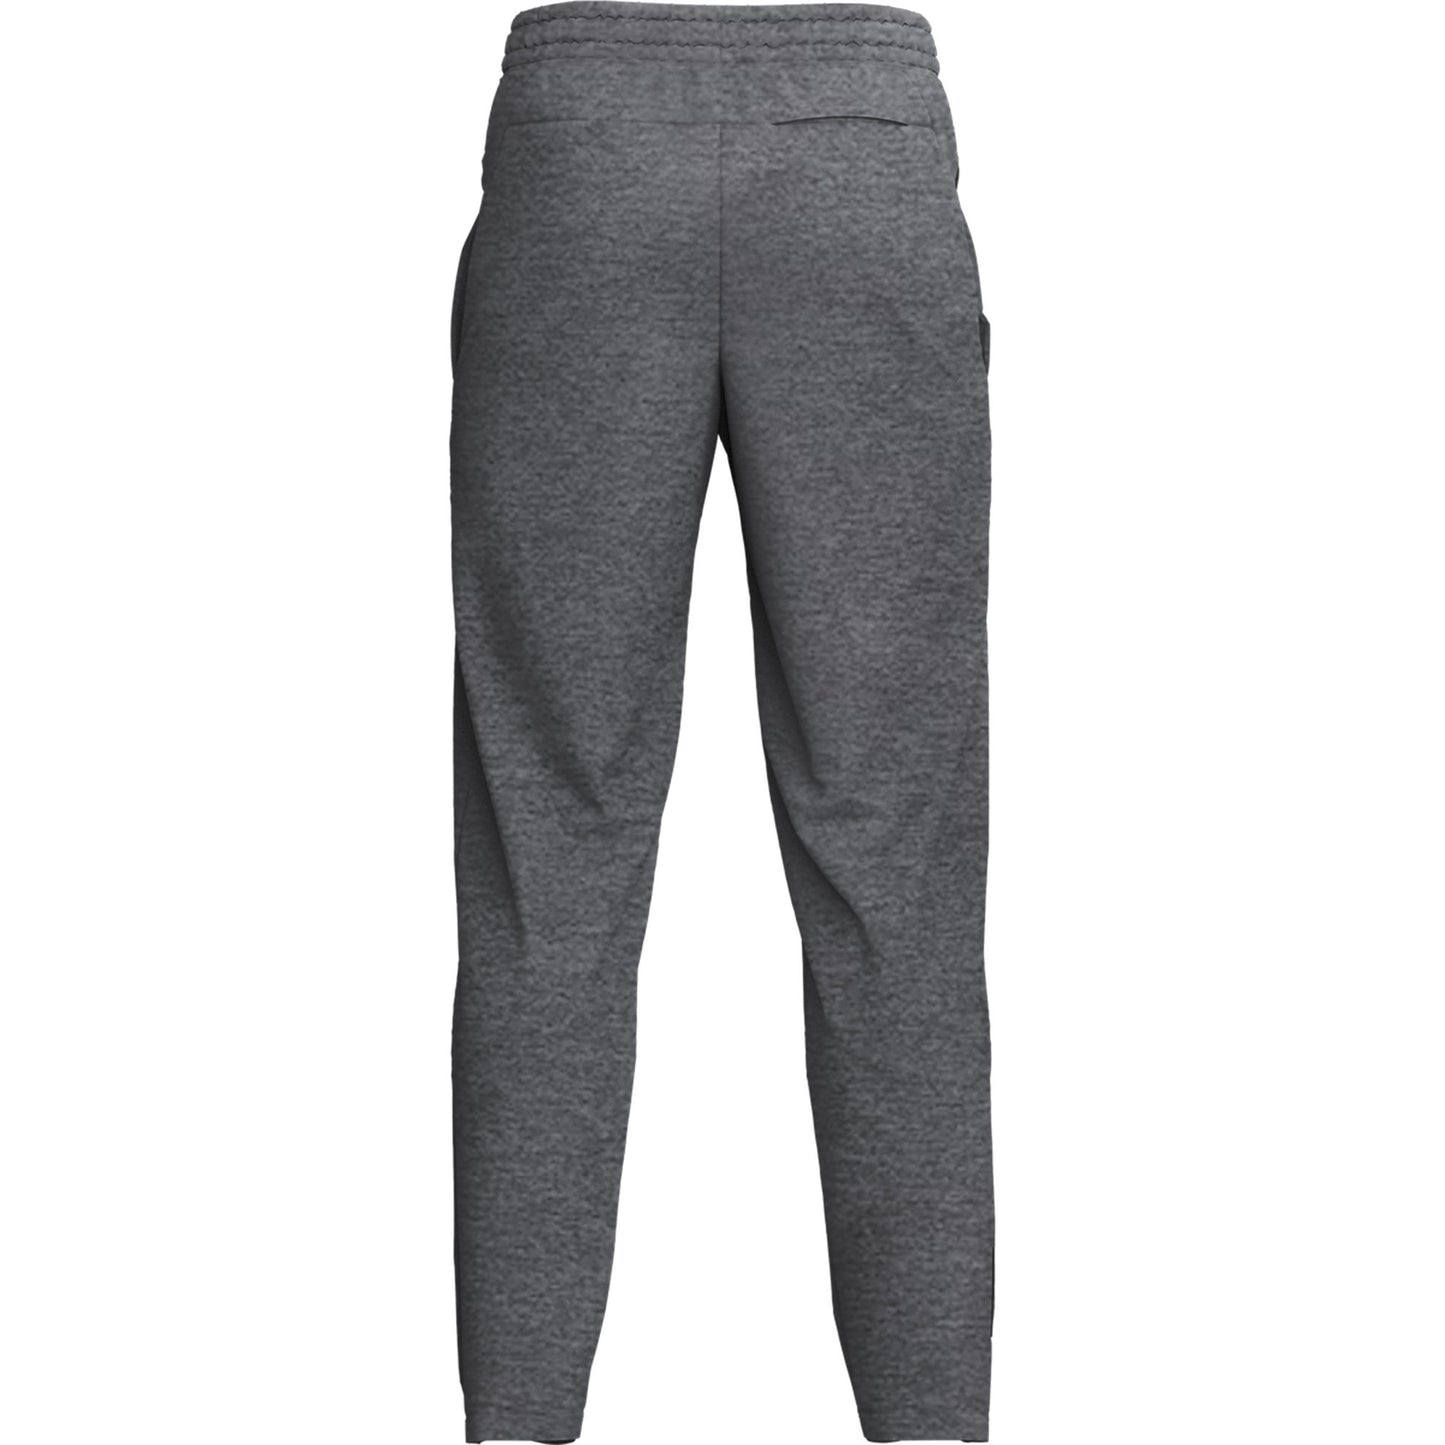 Men's Charcoal Grey Cotton Fleece Thermal Sweatpants